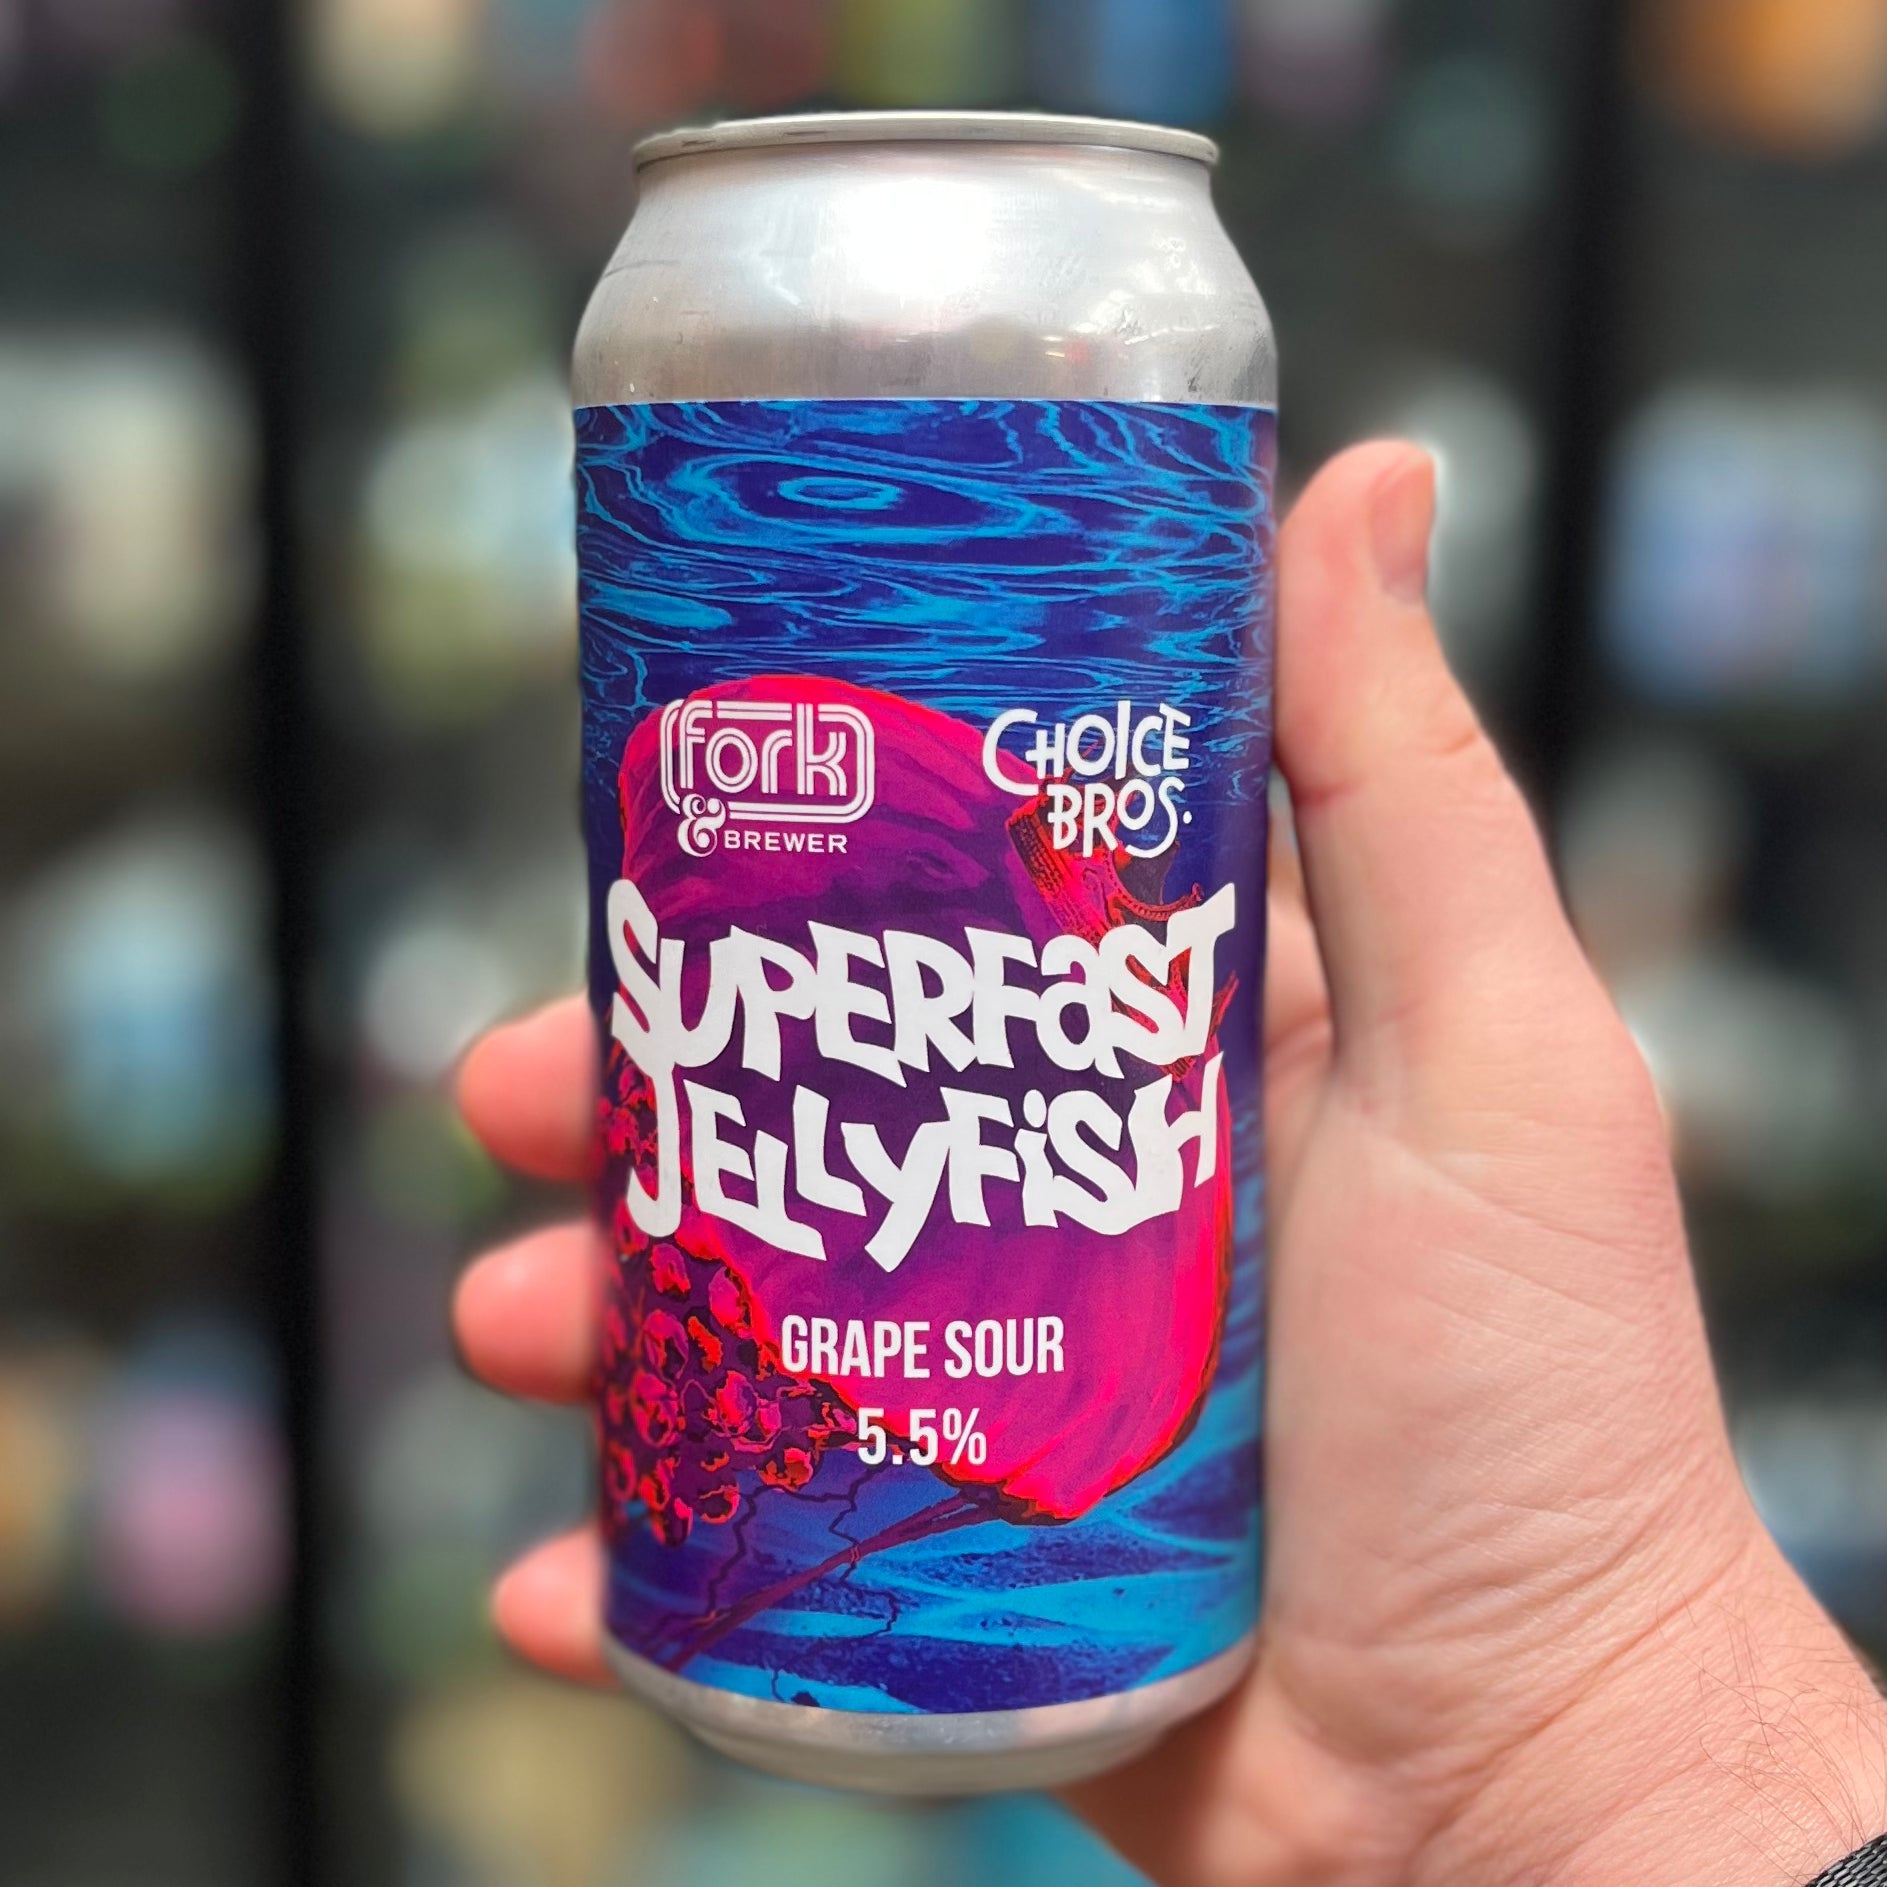 Superfast Jellyfish Grape Sour